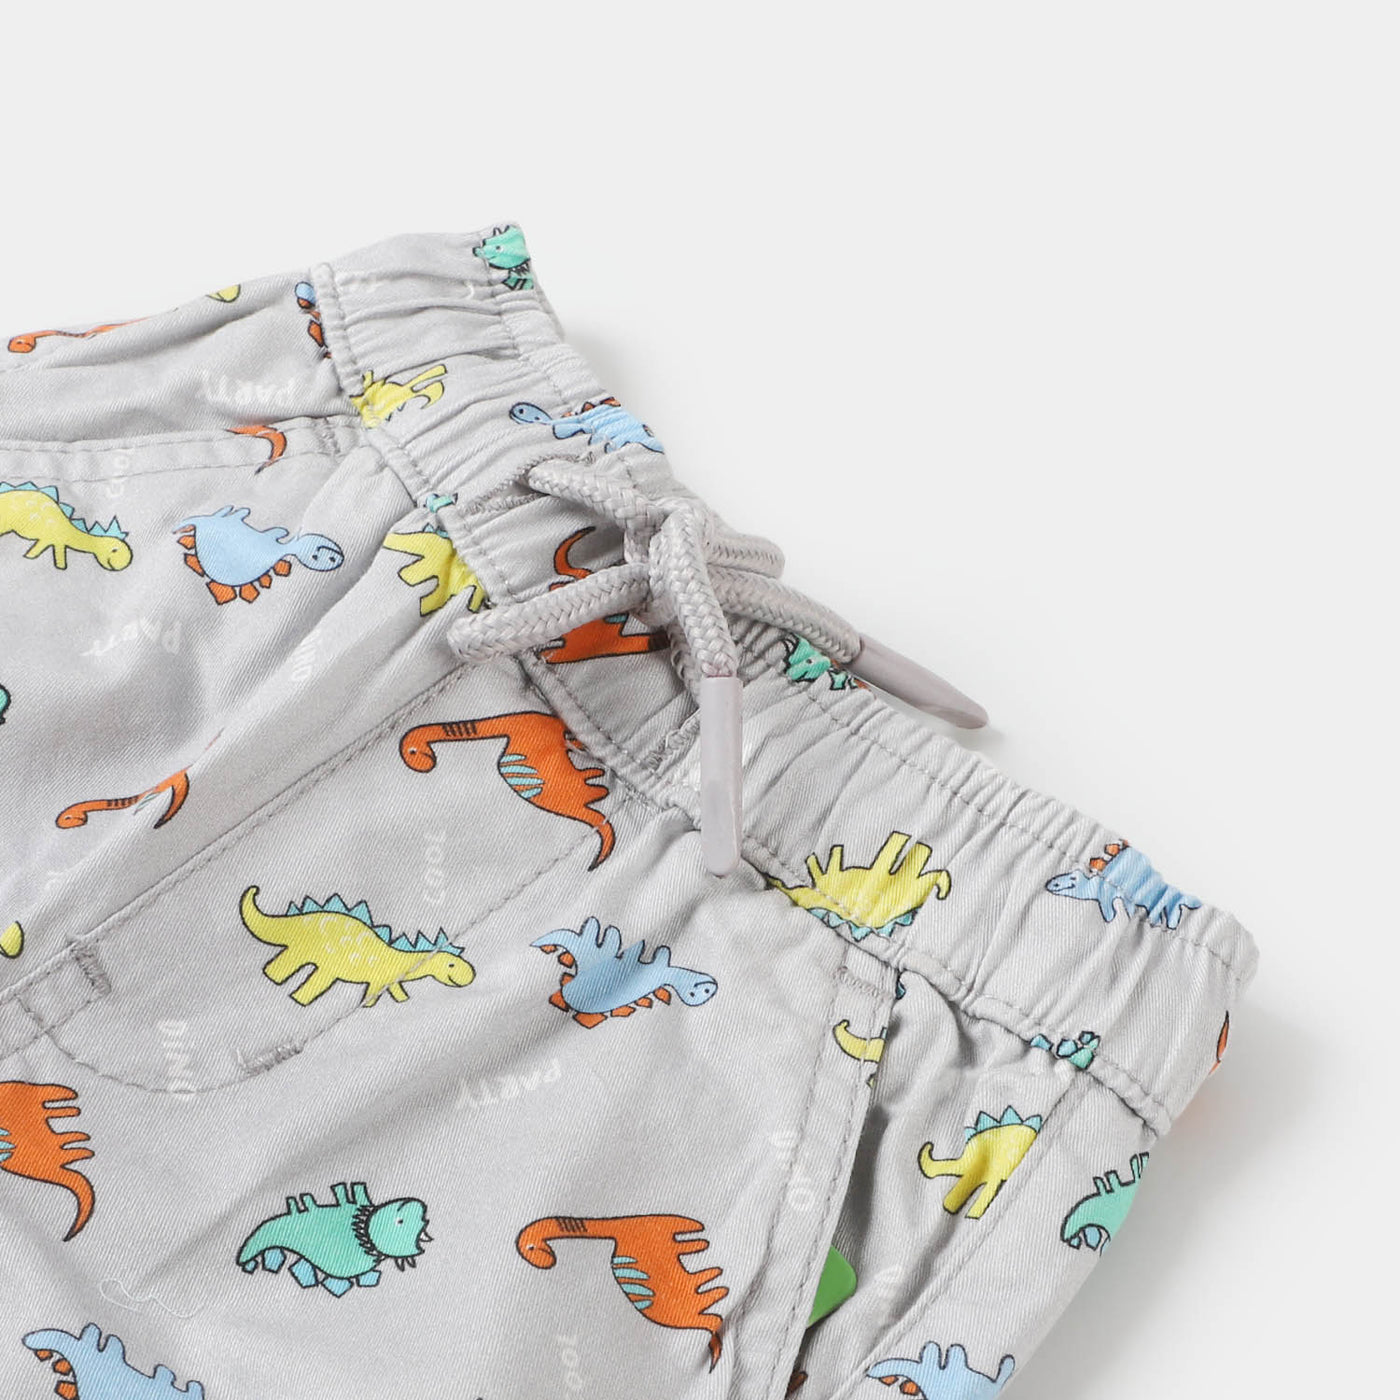 Infant Boys Cotton Pant Print Dino - GREY